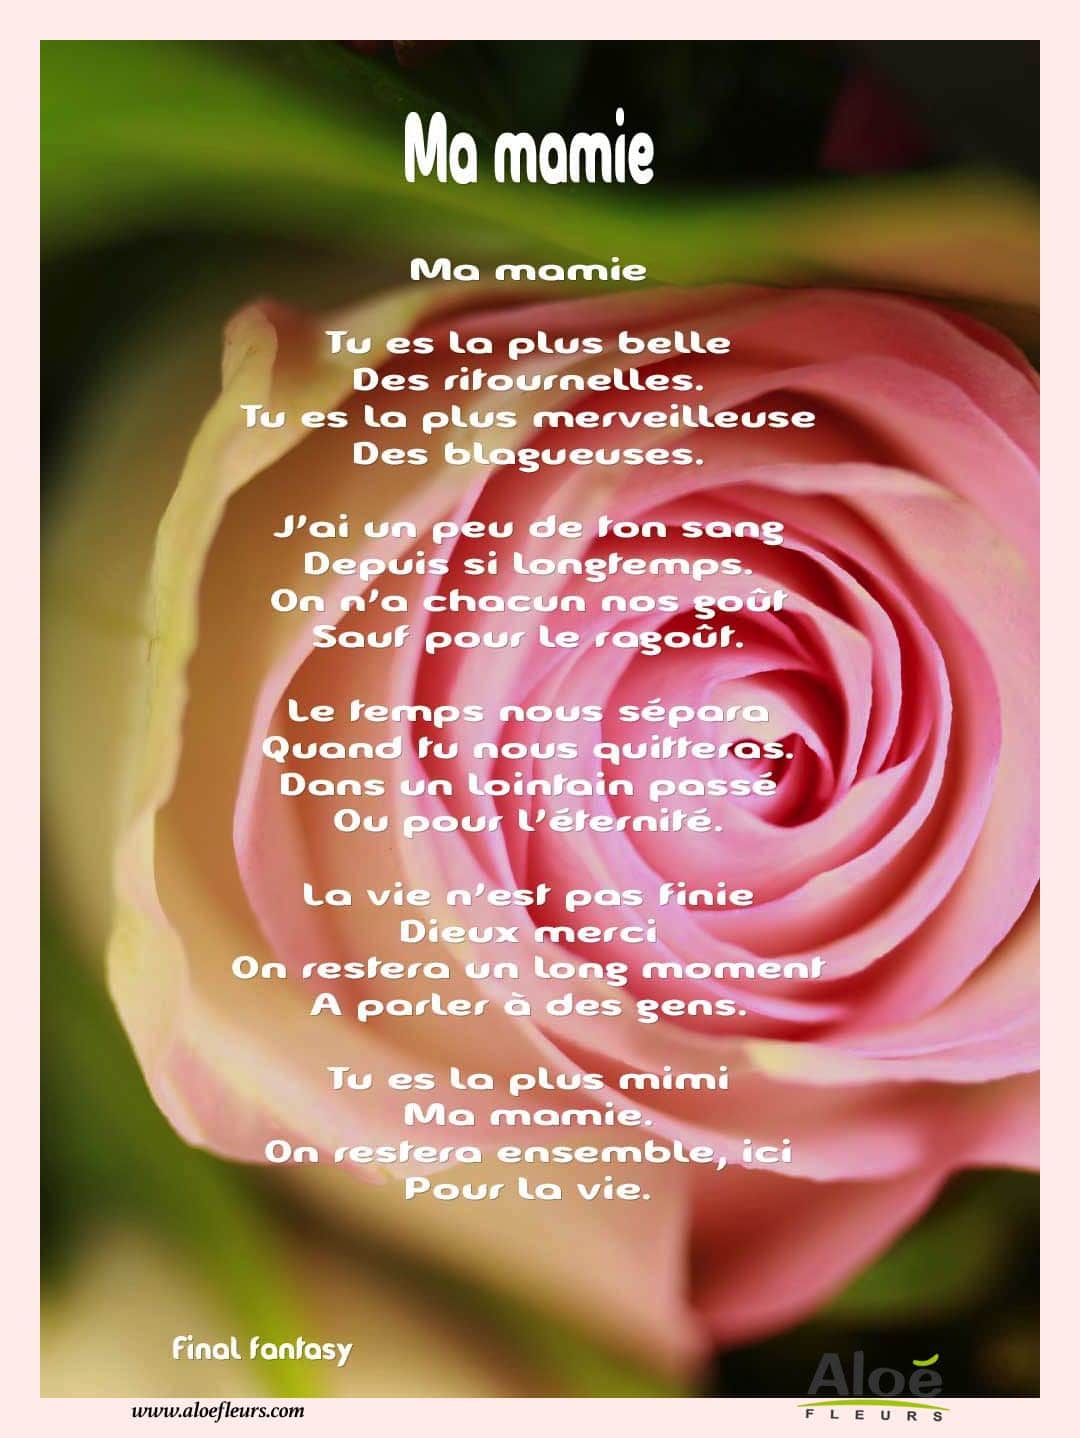 Poemes Fete Des Grands Meres 2016 Aloefleurs.com   Ma Mamie